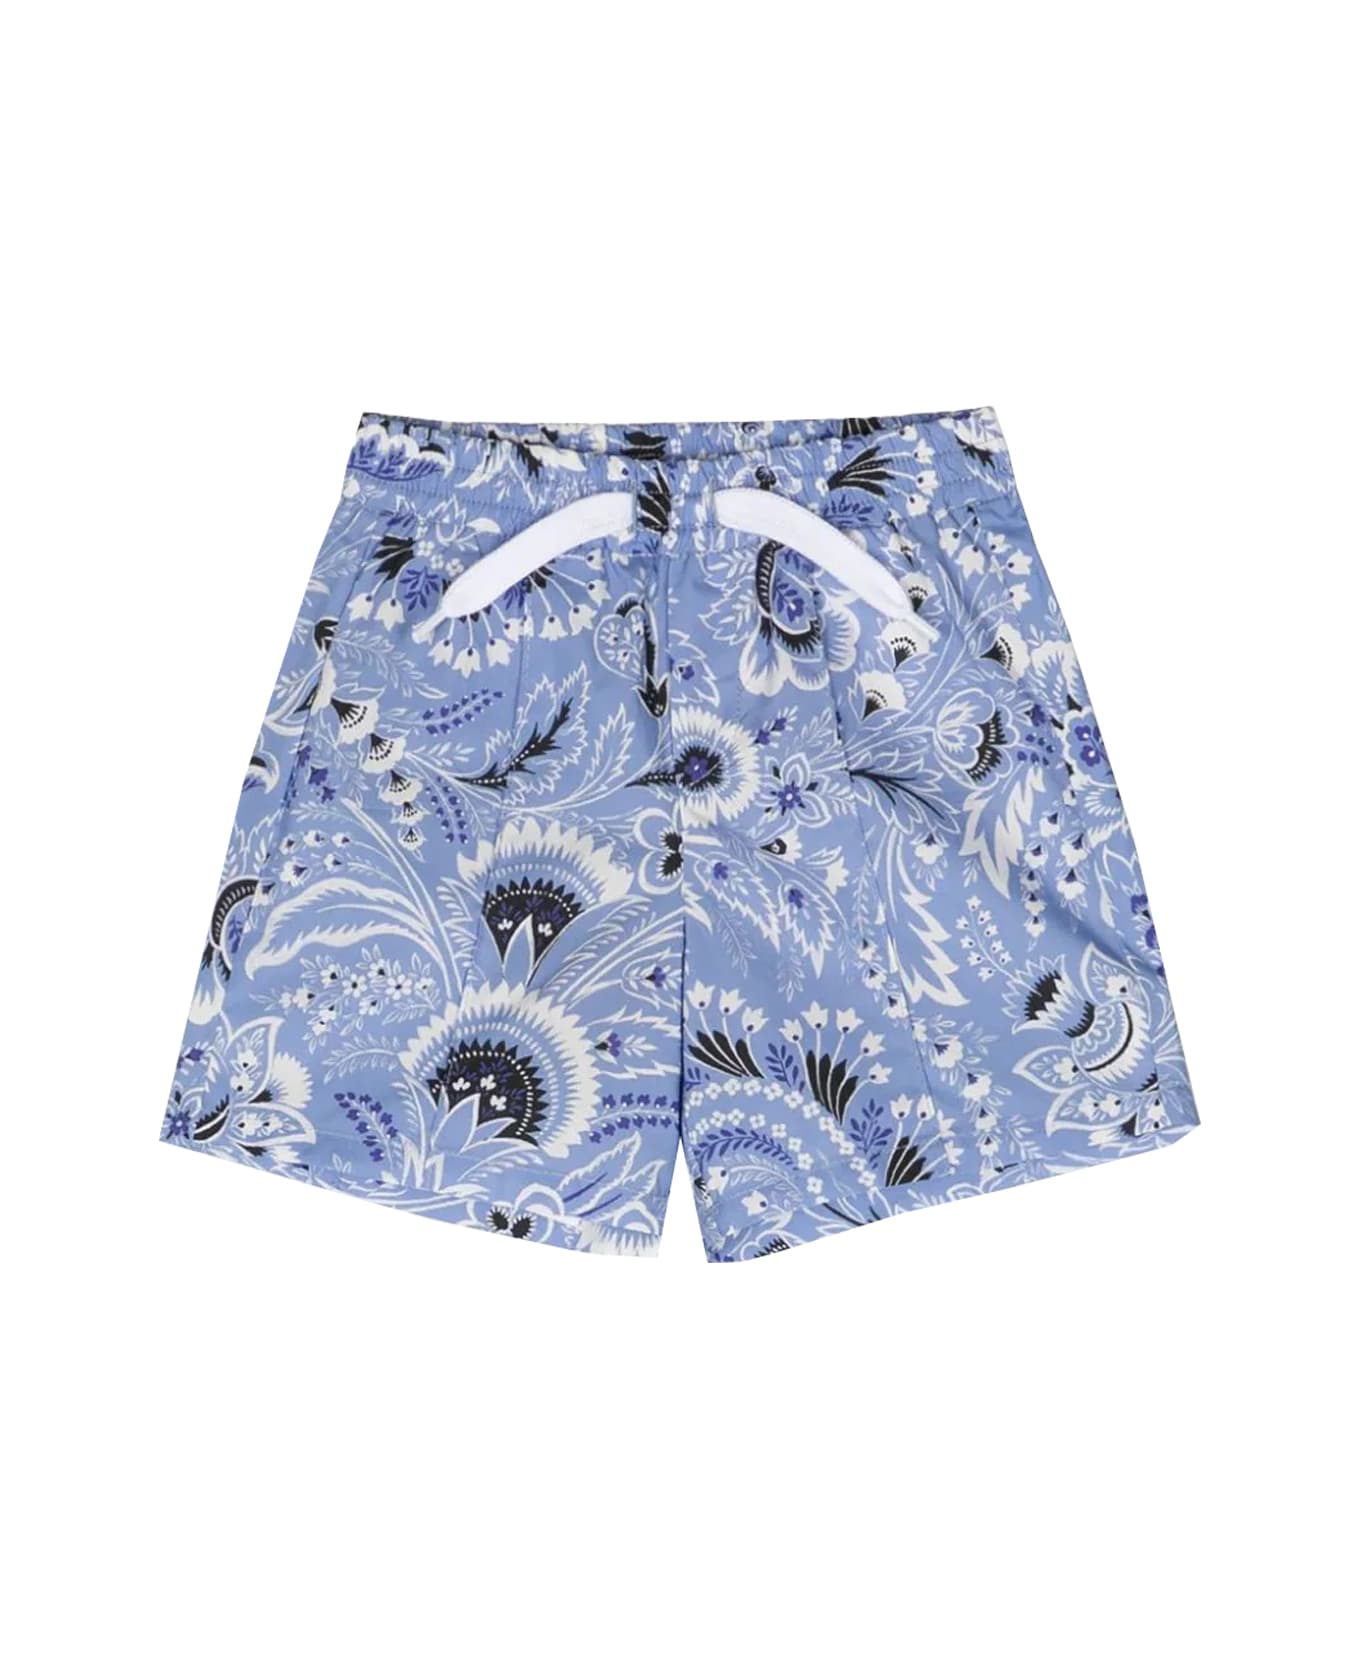 Etro Monochrome Paisley Bermuda Shorts - Light blue ボトムス